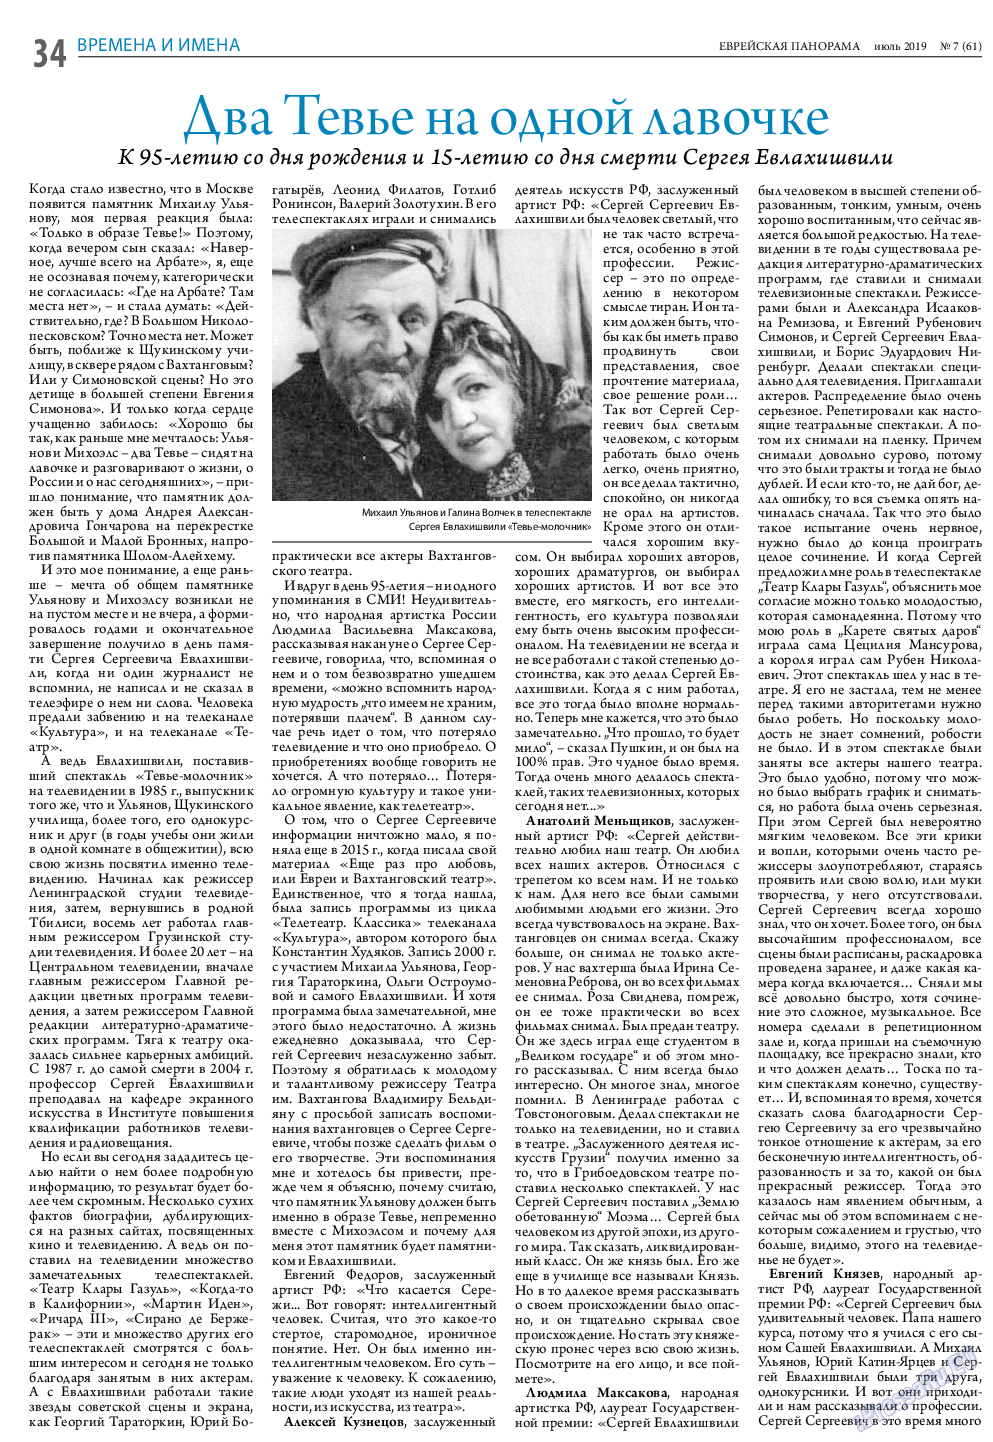 Еврейская панорама, газета. 2019 №7 стр.34